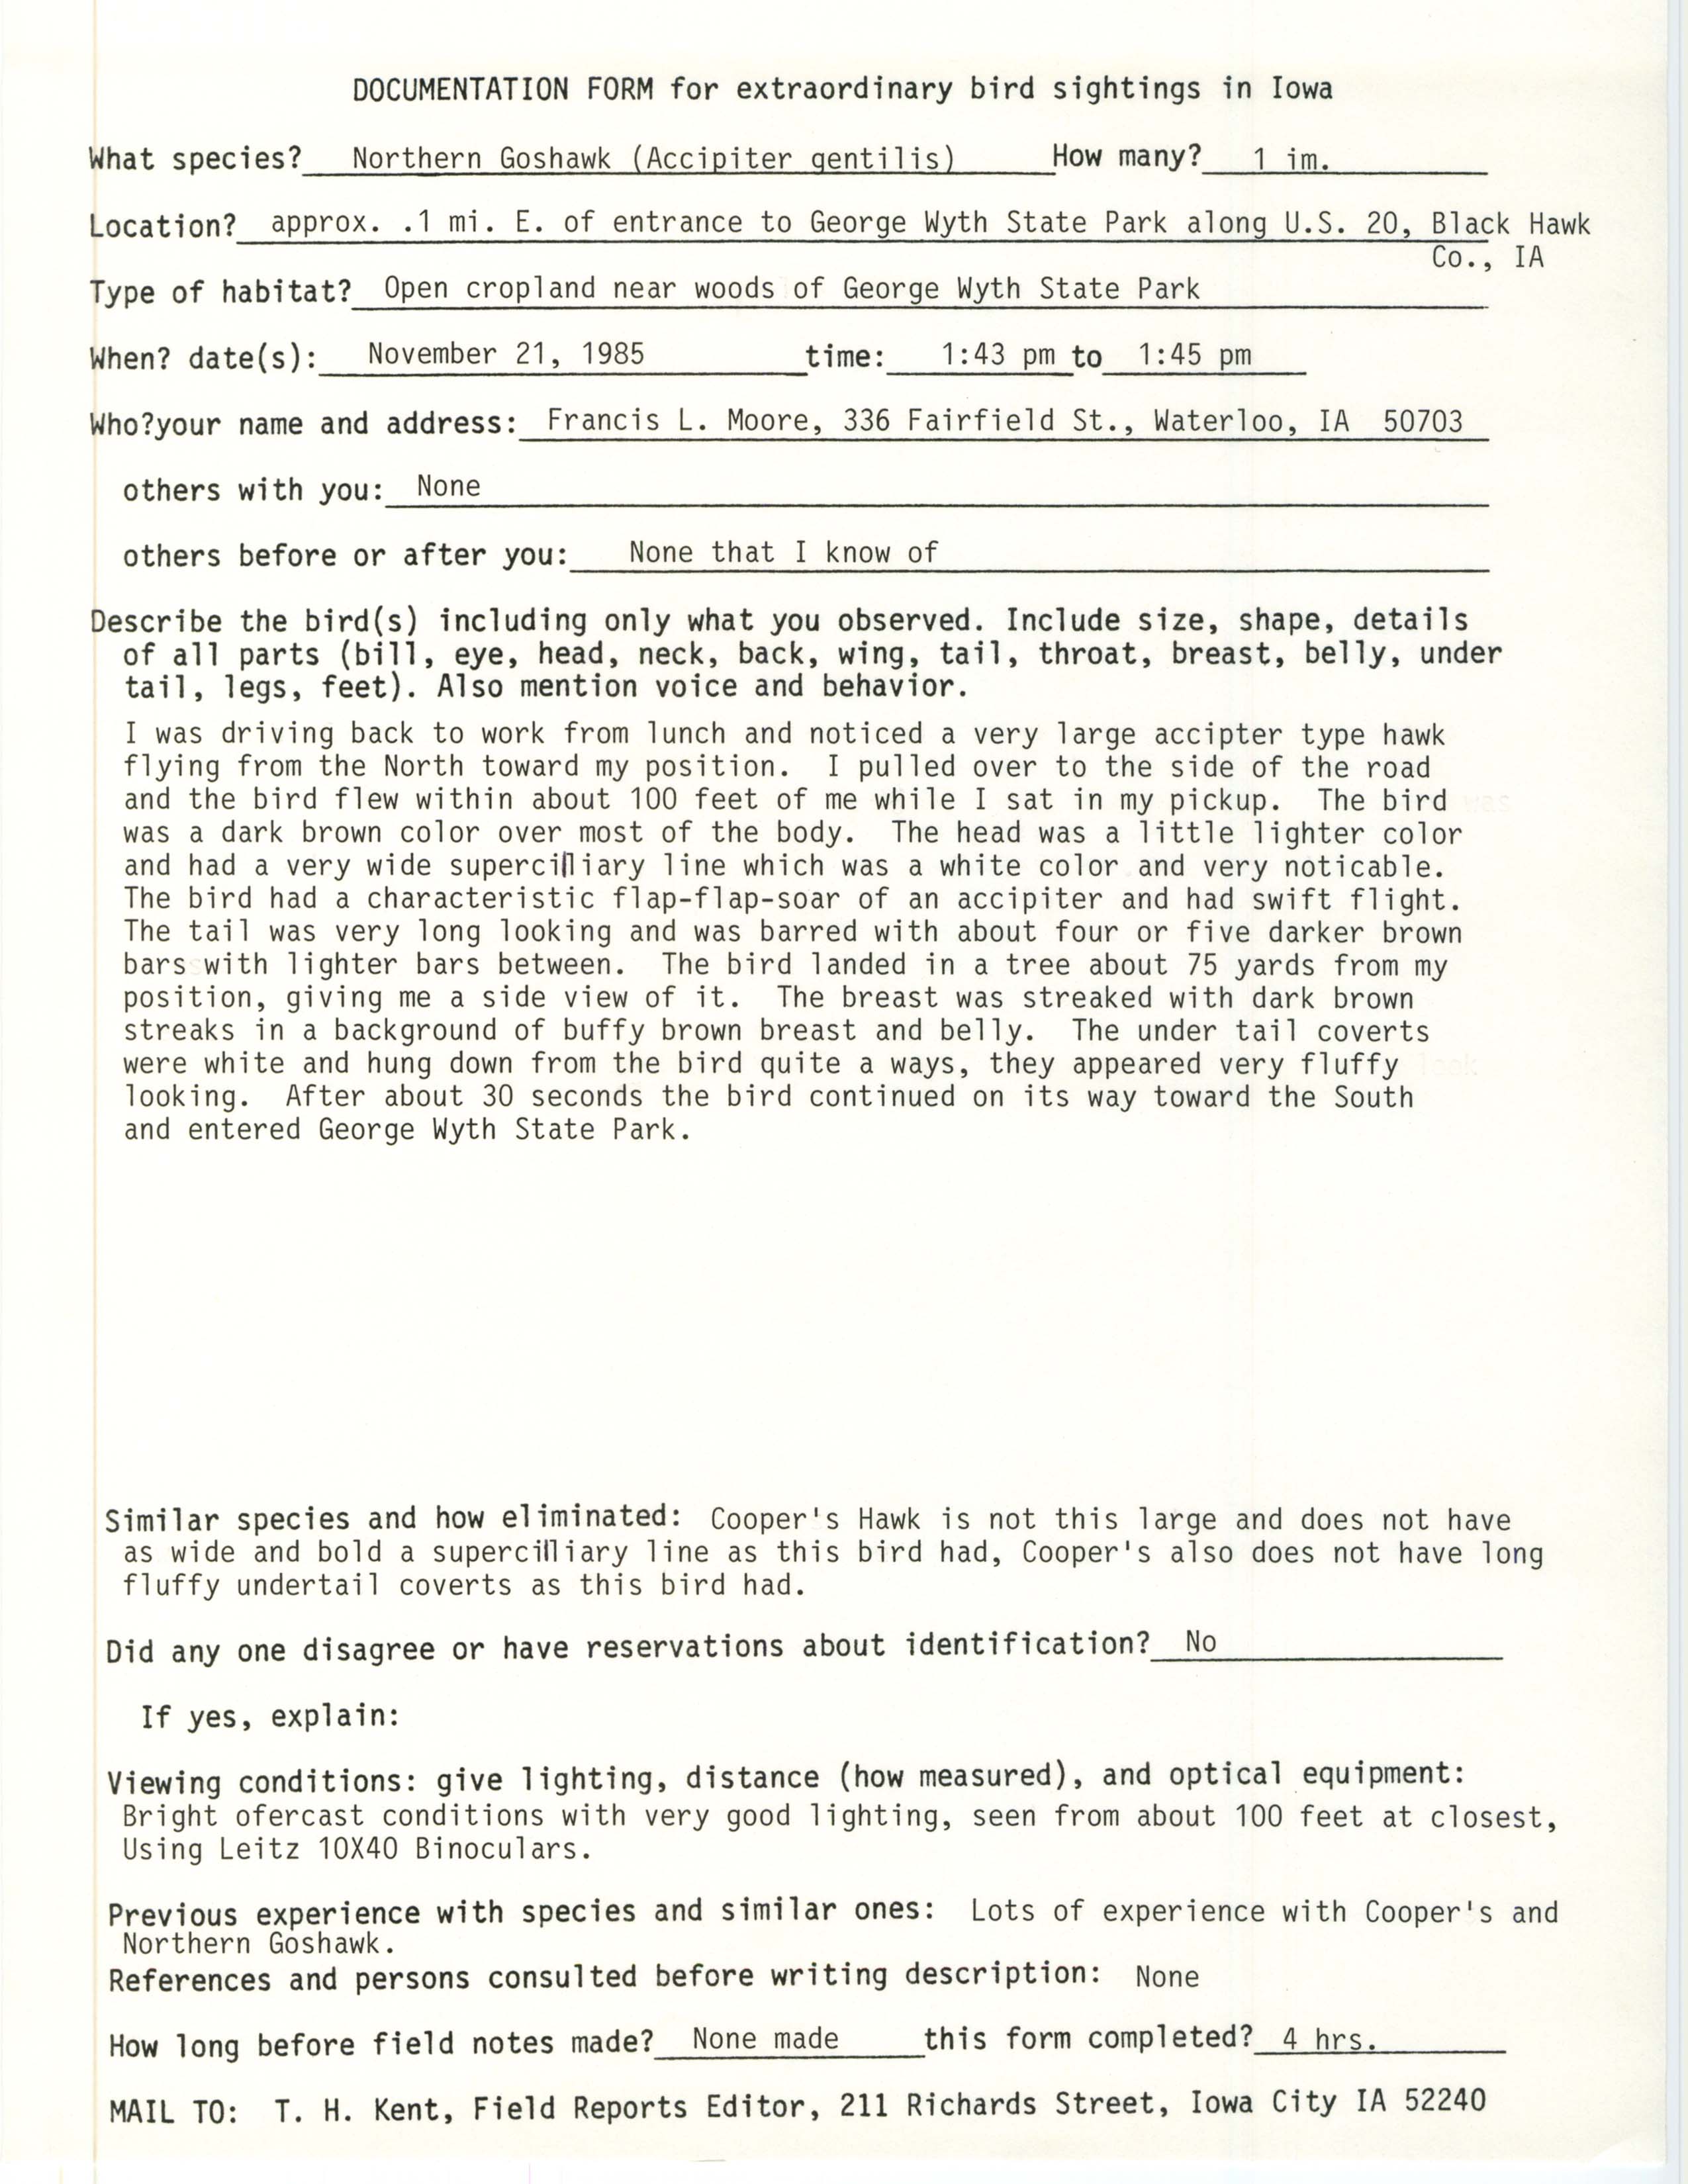 Rare bird documentation form for Northern Goshawk at George Wyth State Park, 1985